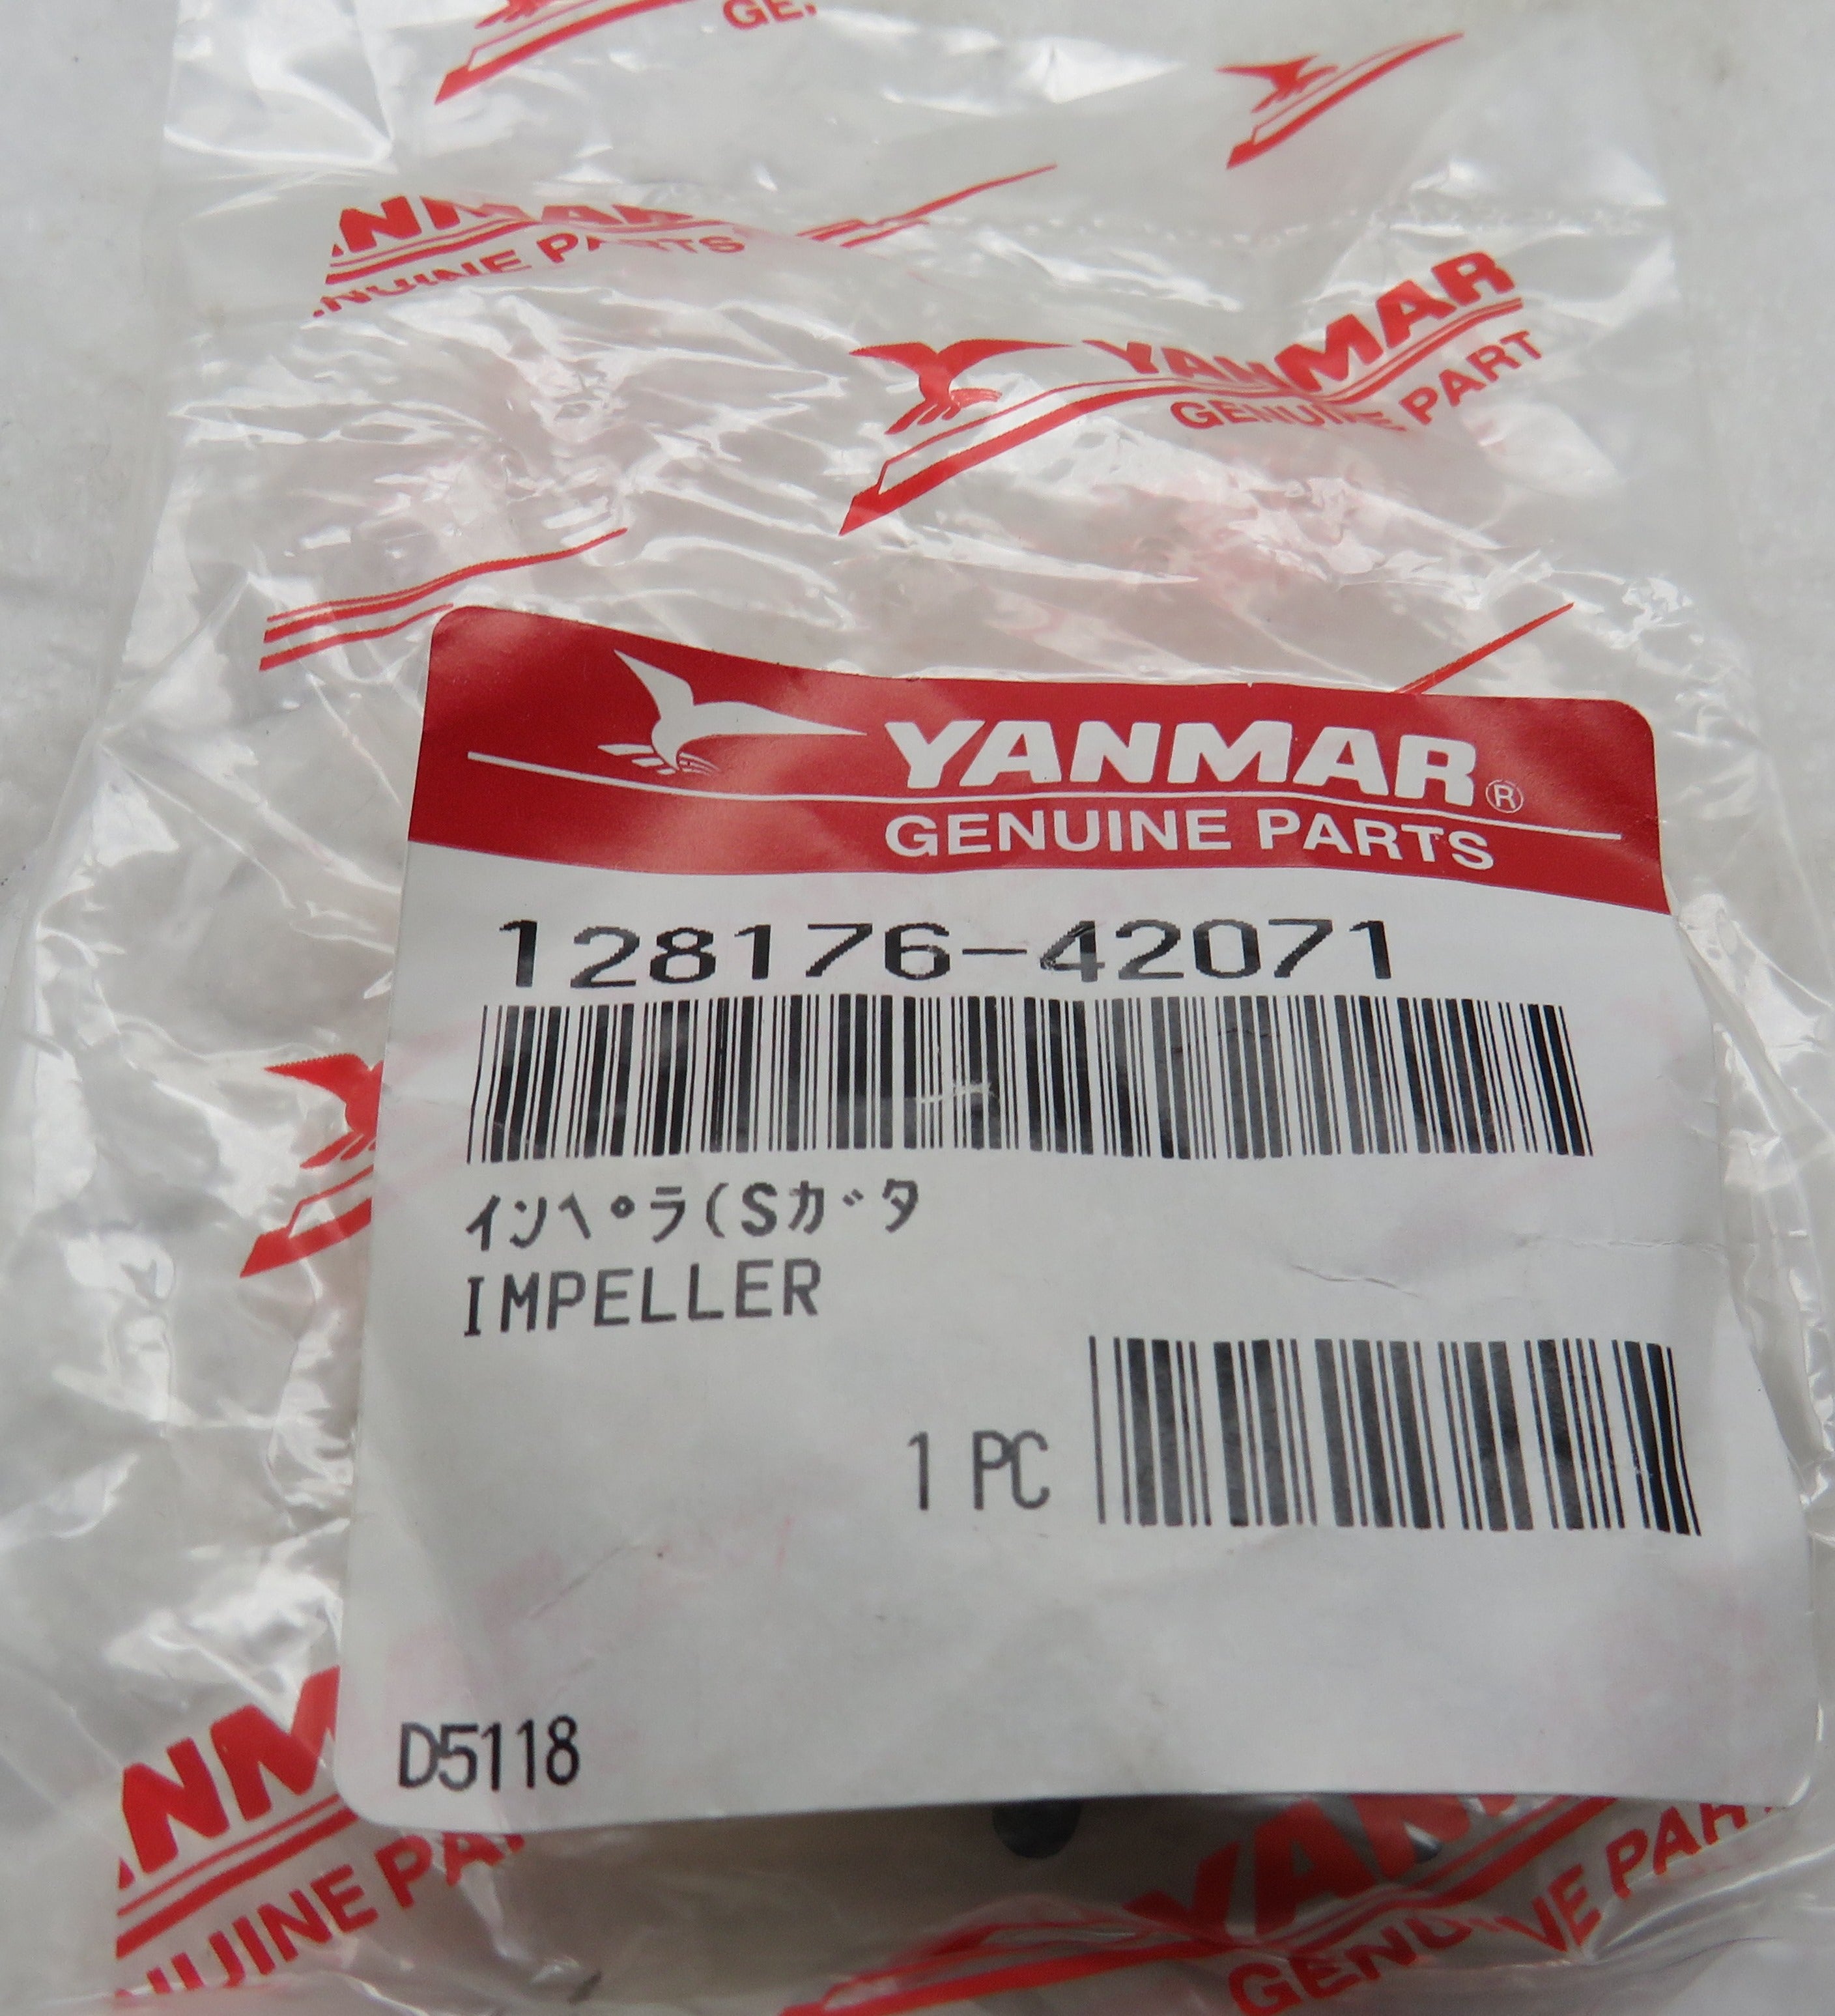 Yanmar 128176-42071 Impeller OBSOLETE